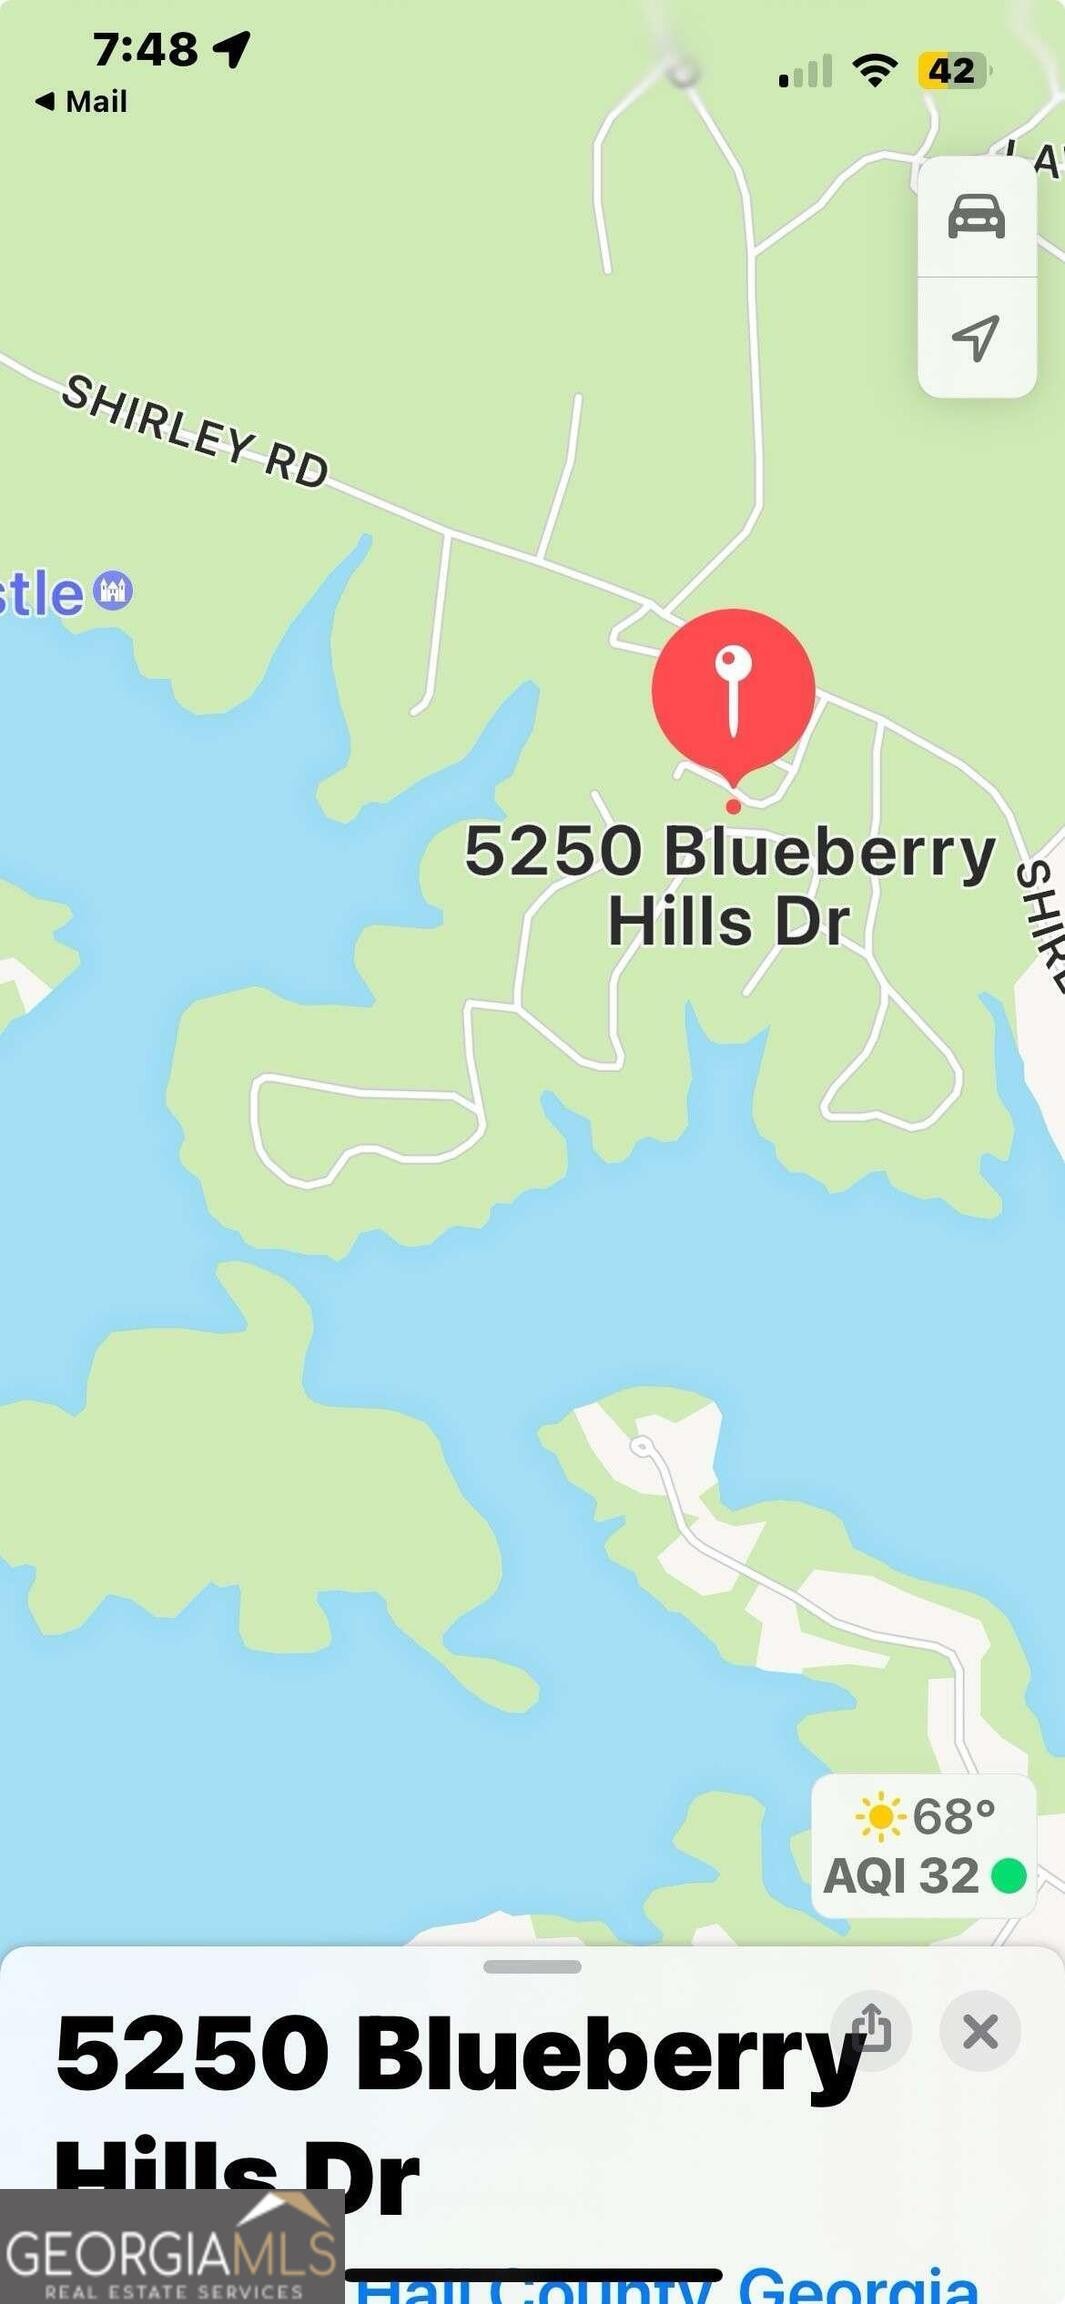 8. 5250 Blueberry Hills Dr